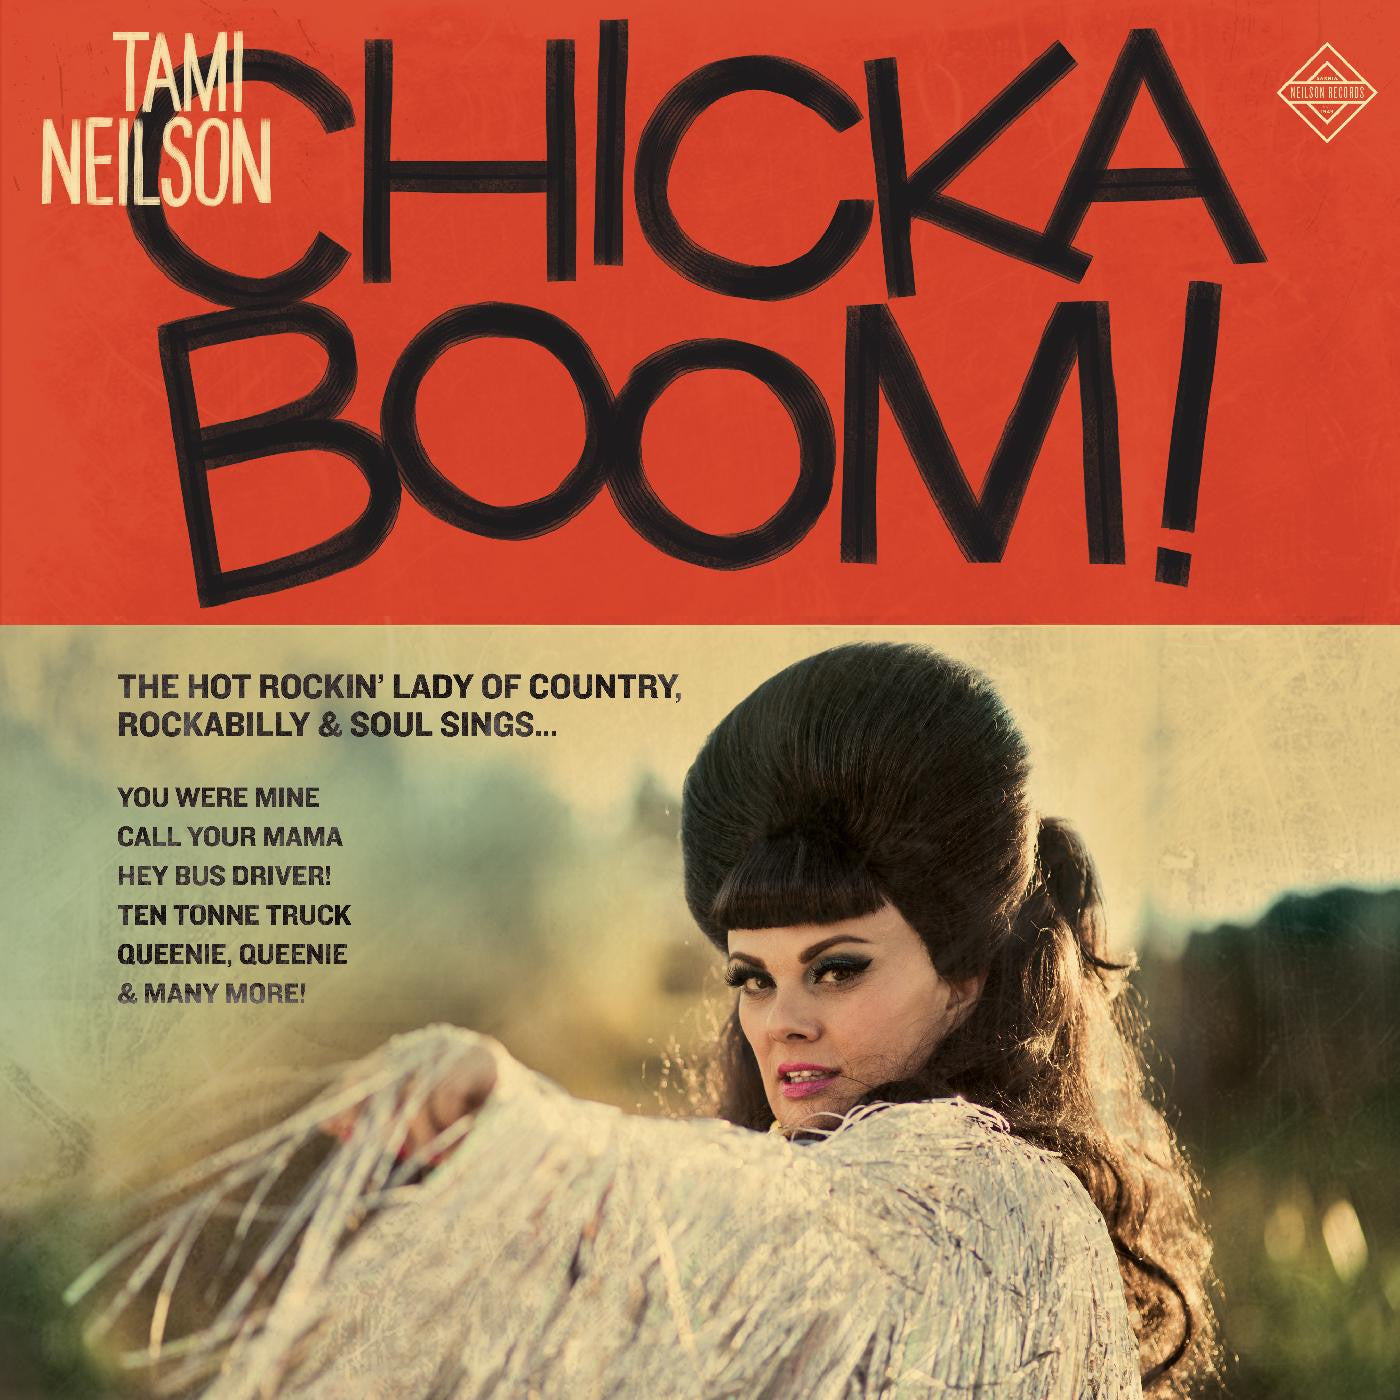 Tami Neilson - Chickaboom! (Vinyl LP)